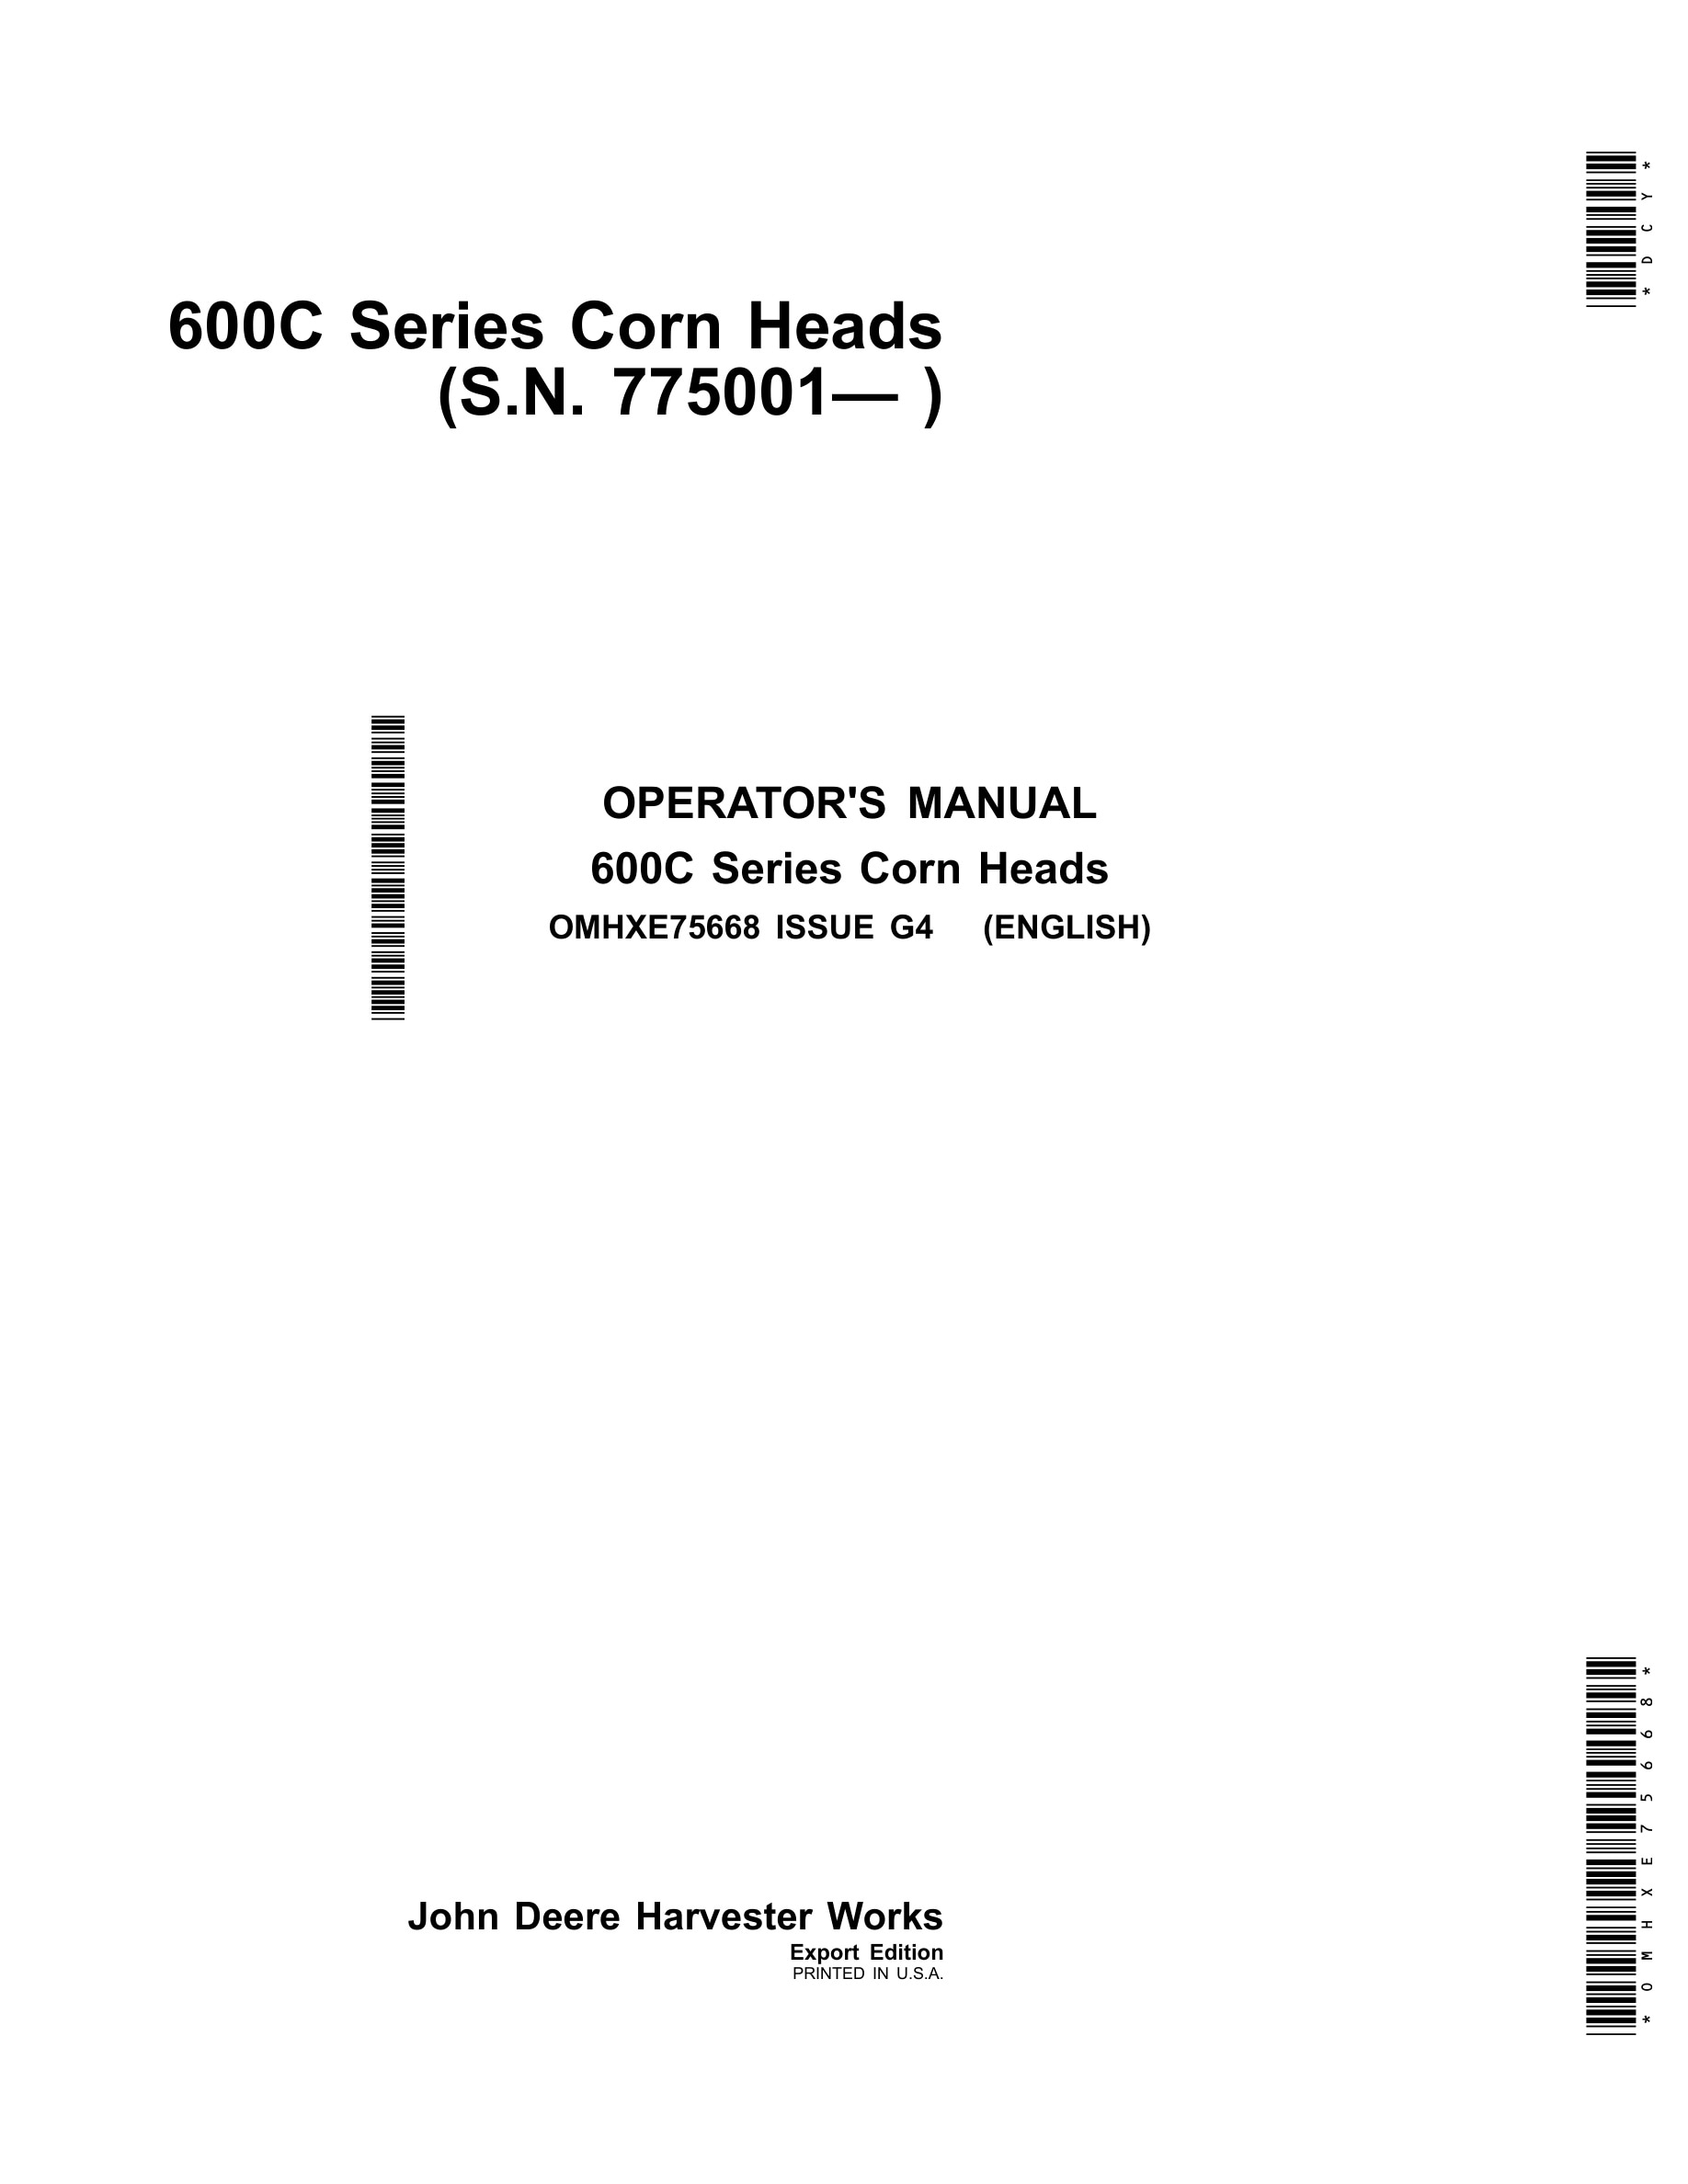 John Deere 600C Series Corn Heads Operator Manual OMHXE75668-1